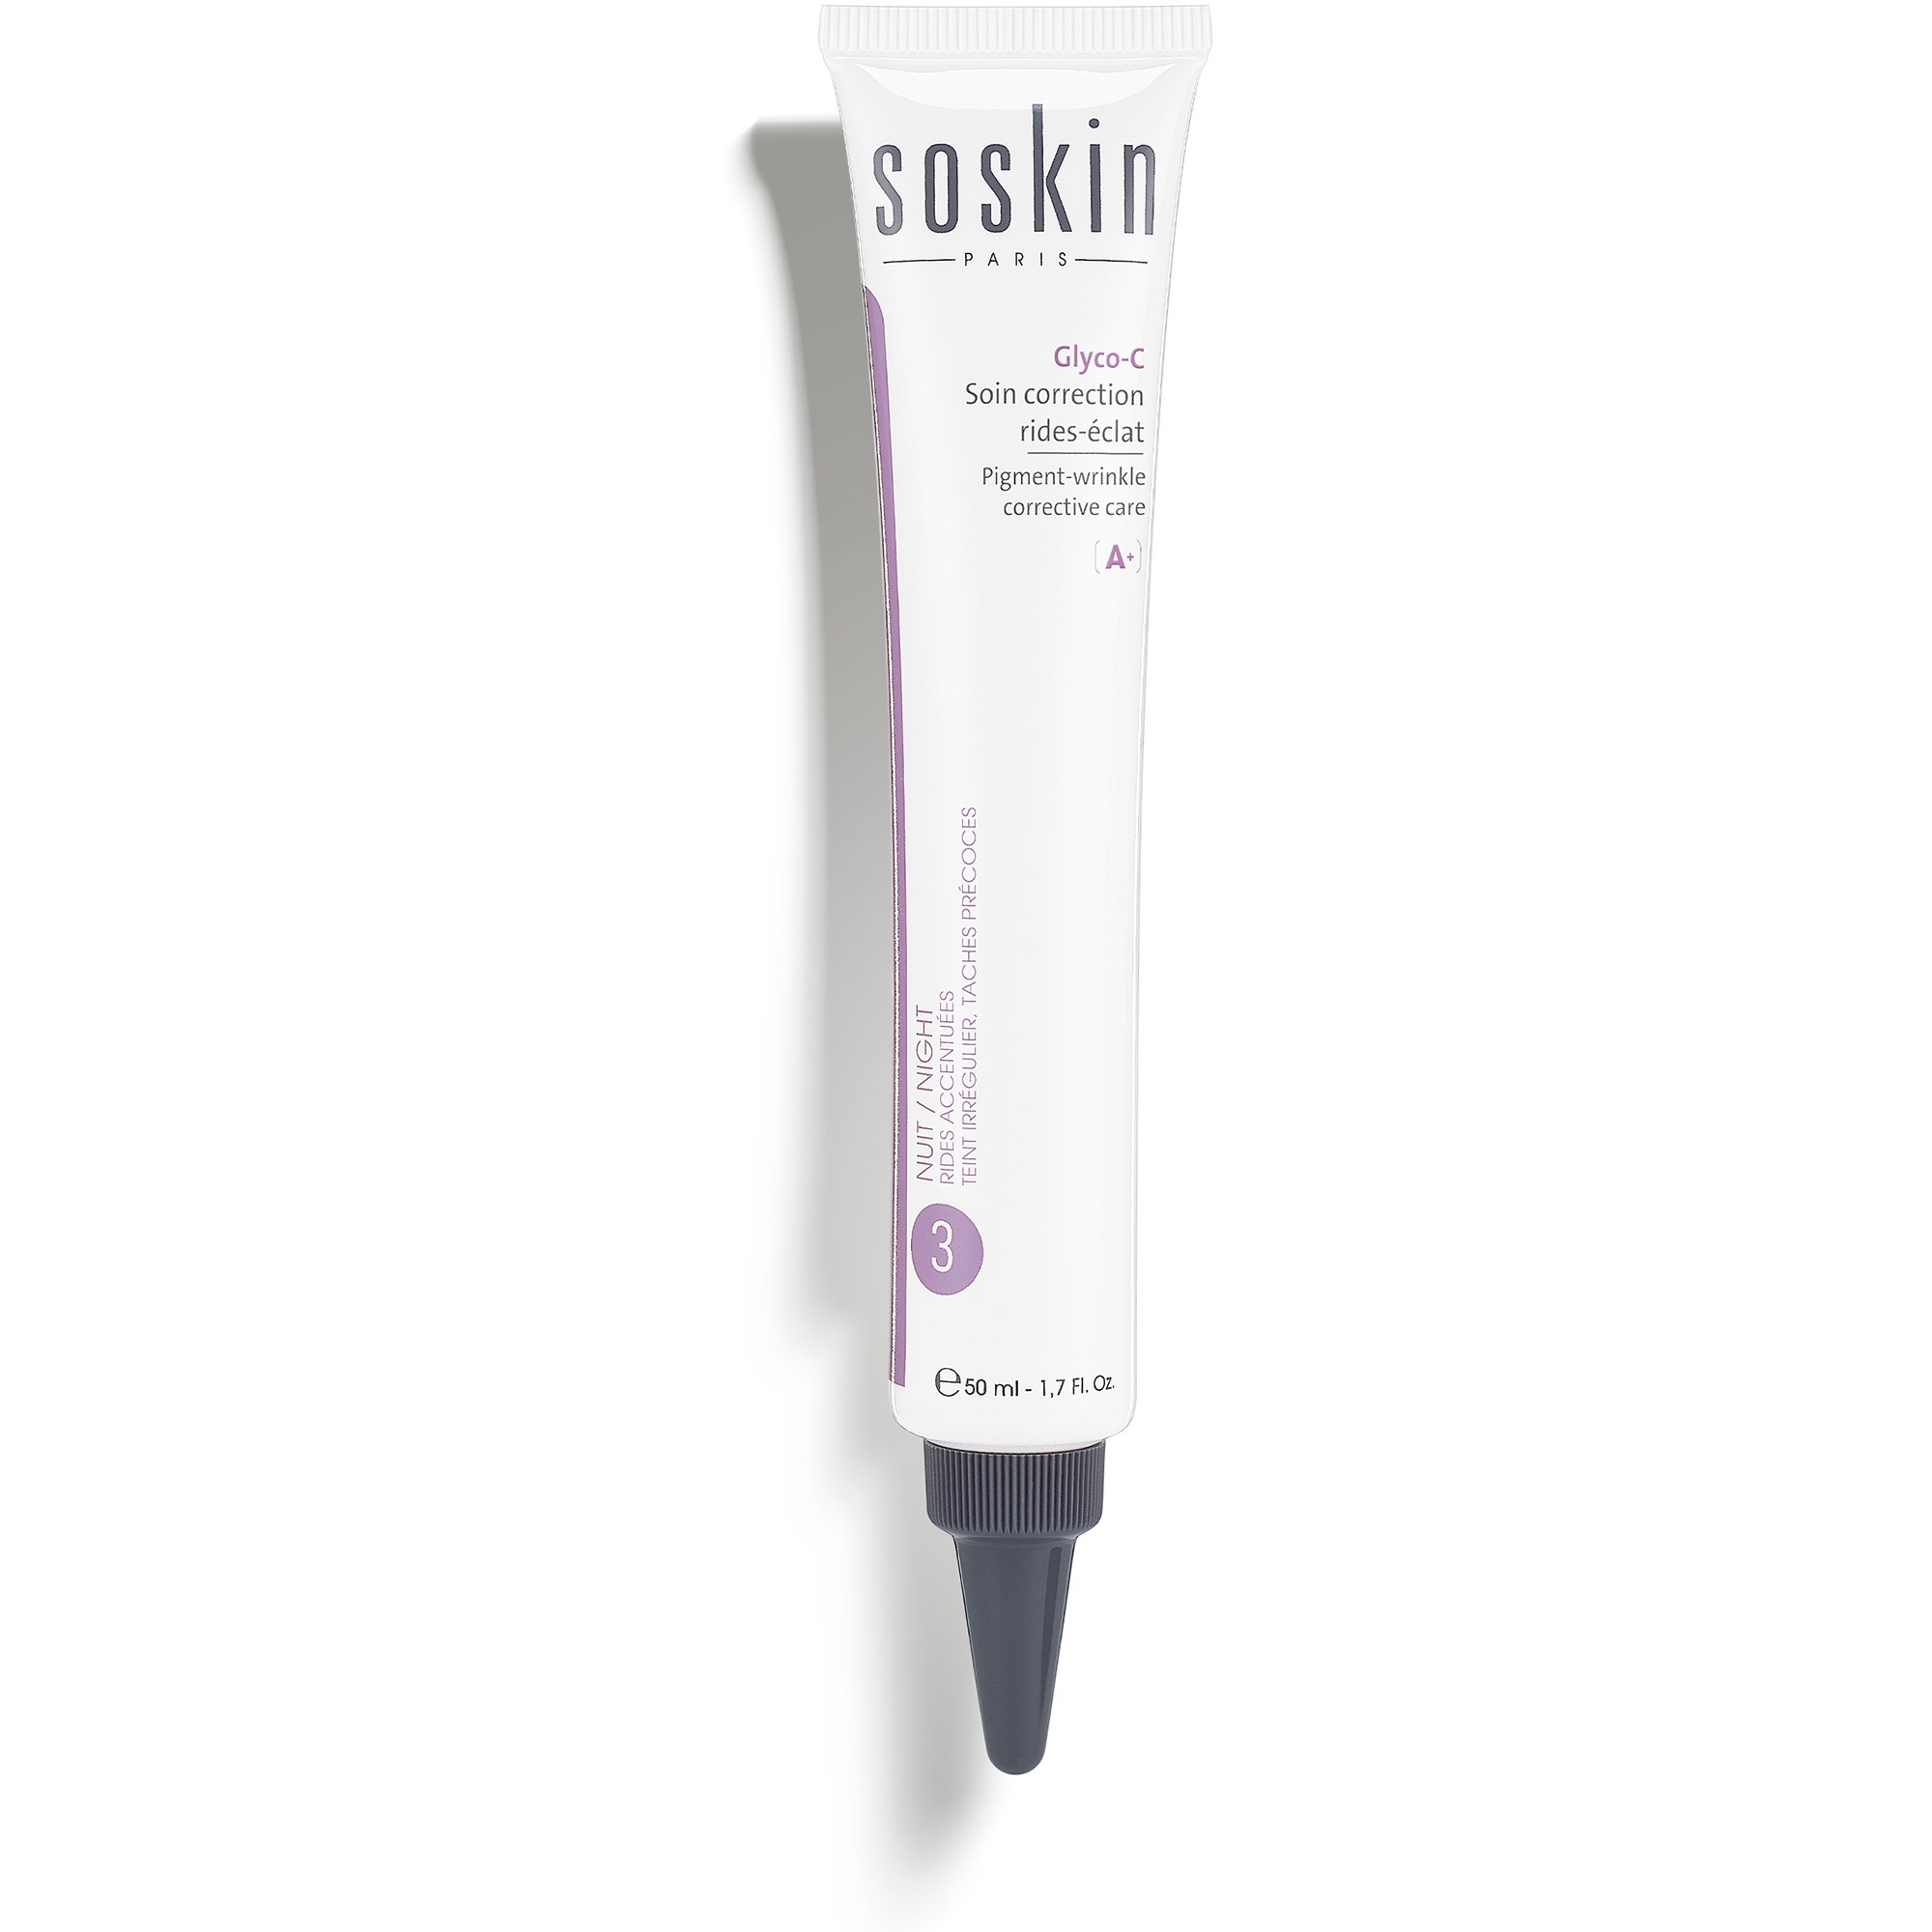 Läs mer om SOSkin Glyco-C Pigment-Wrinkle Corrective Care 50 ml